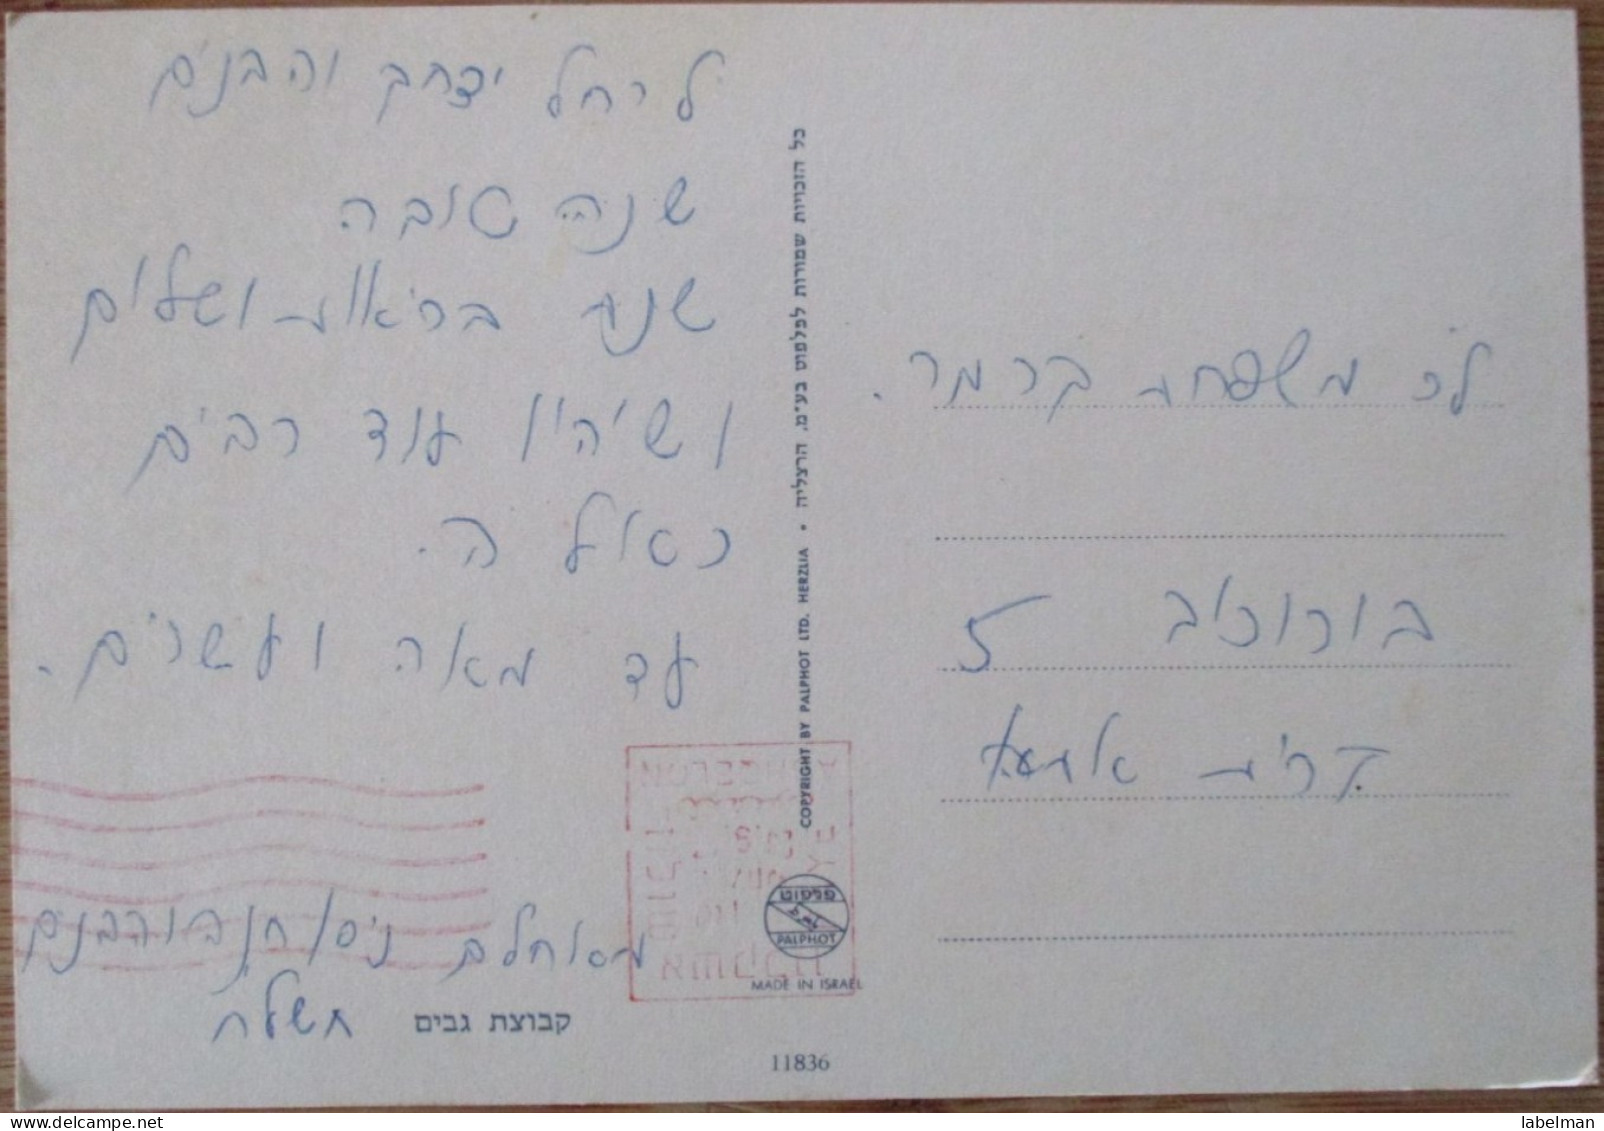 ISRAEL SDEROT NEGEV DESERT KIBBUTZ GEVIM POSTCARD KARTE CARD ANSICHTSKARTE CARTOLINA CARTE POSTALE PC POSTKARTE - Israël